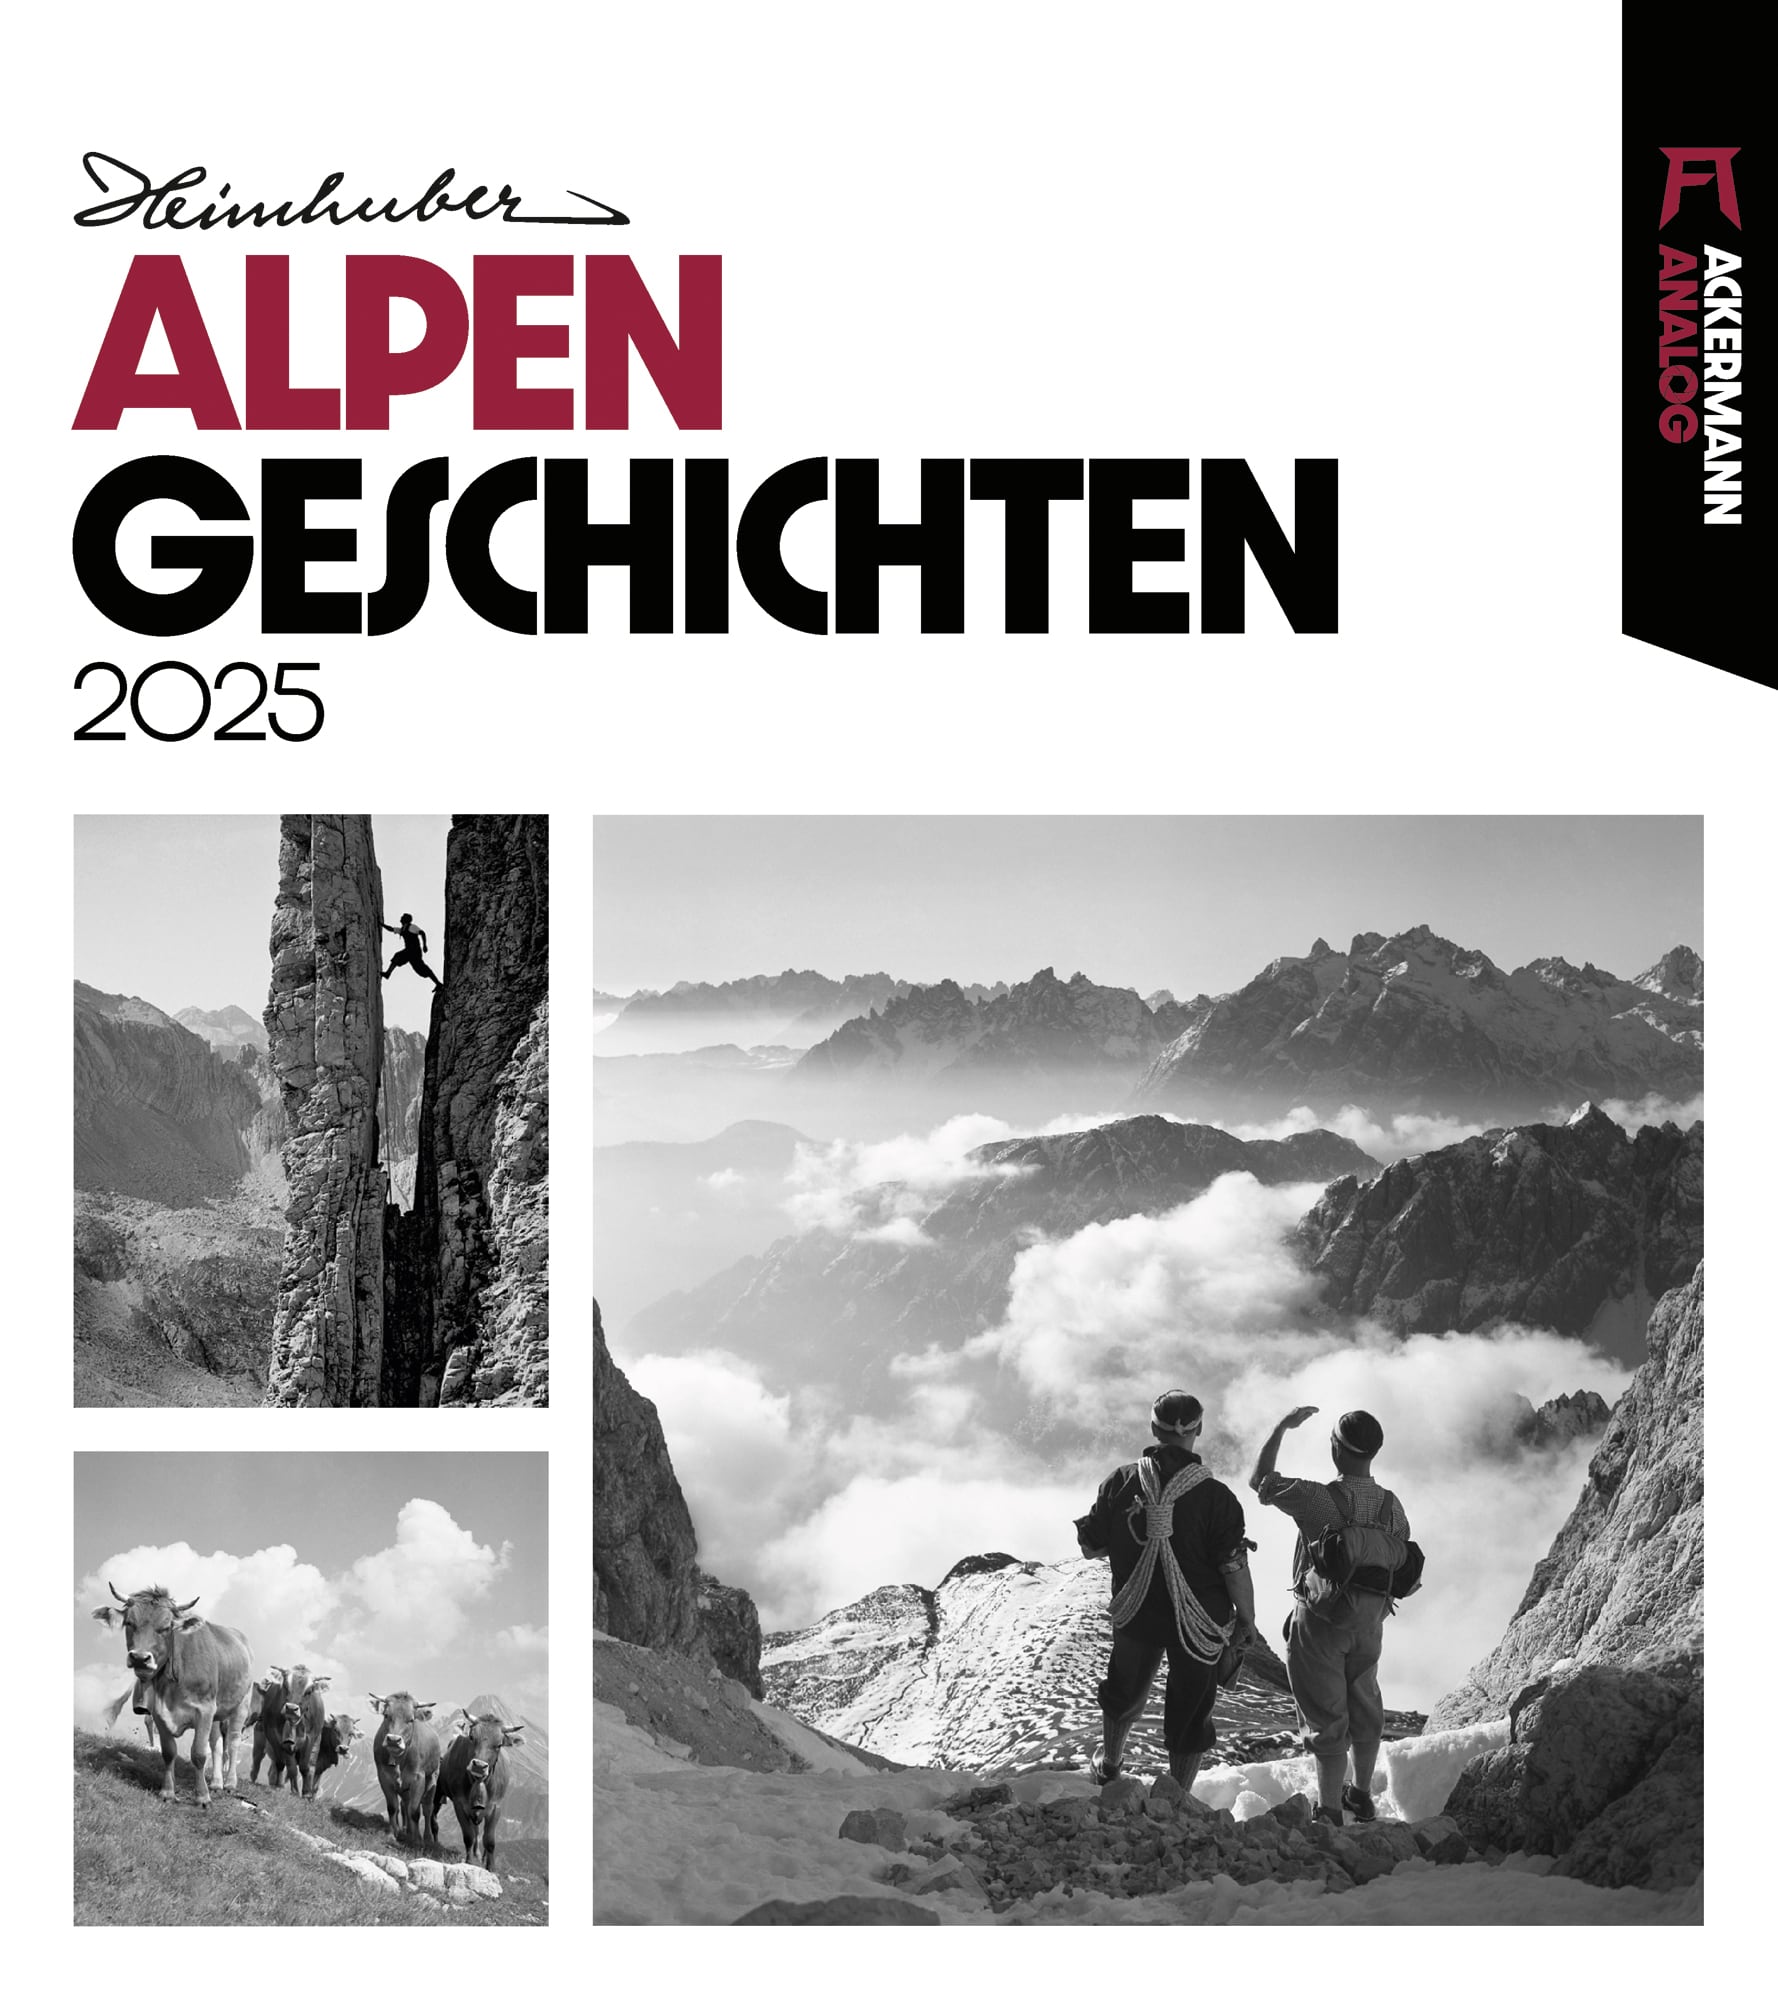 Ackermann Calendar Alpine Stories 2025 - Cover Page